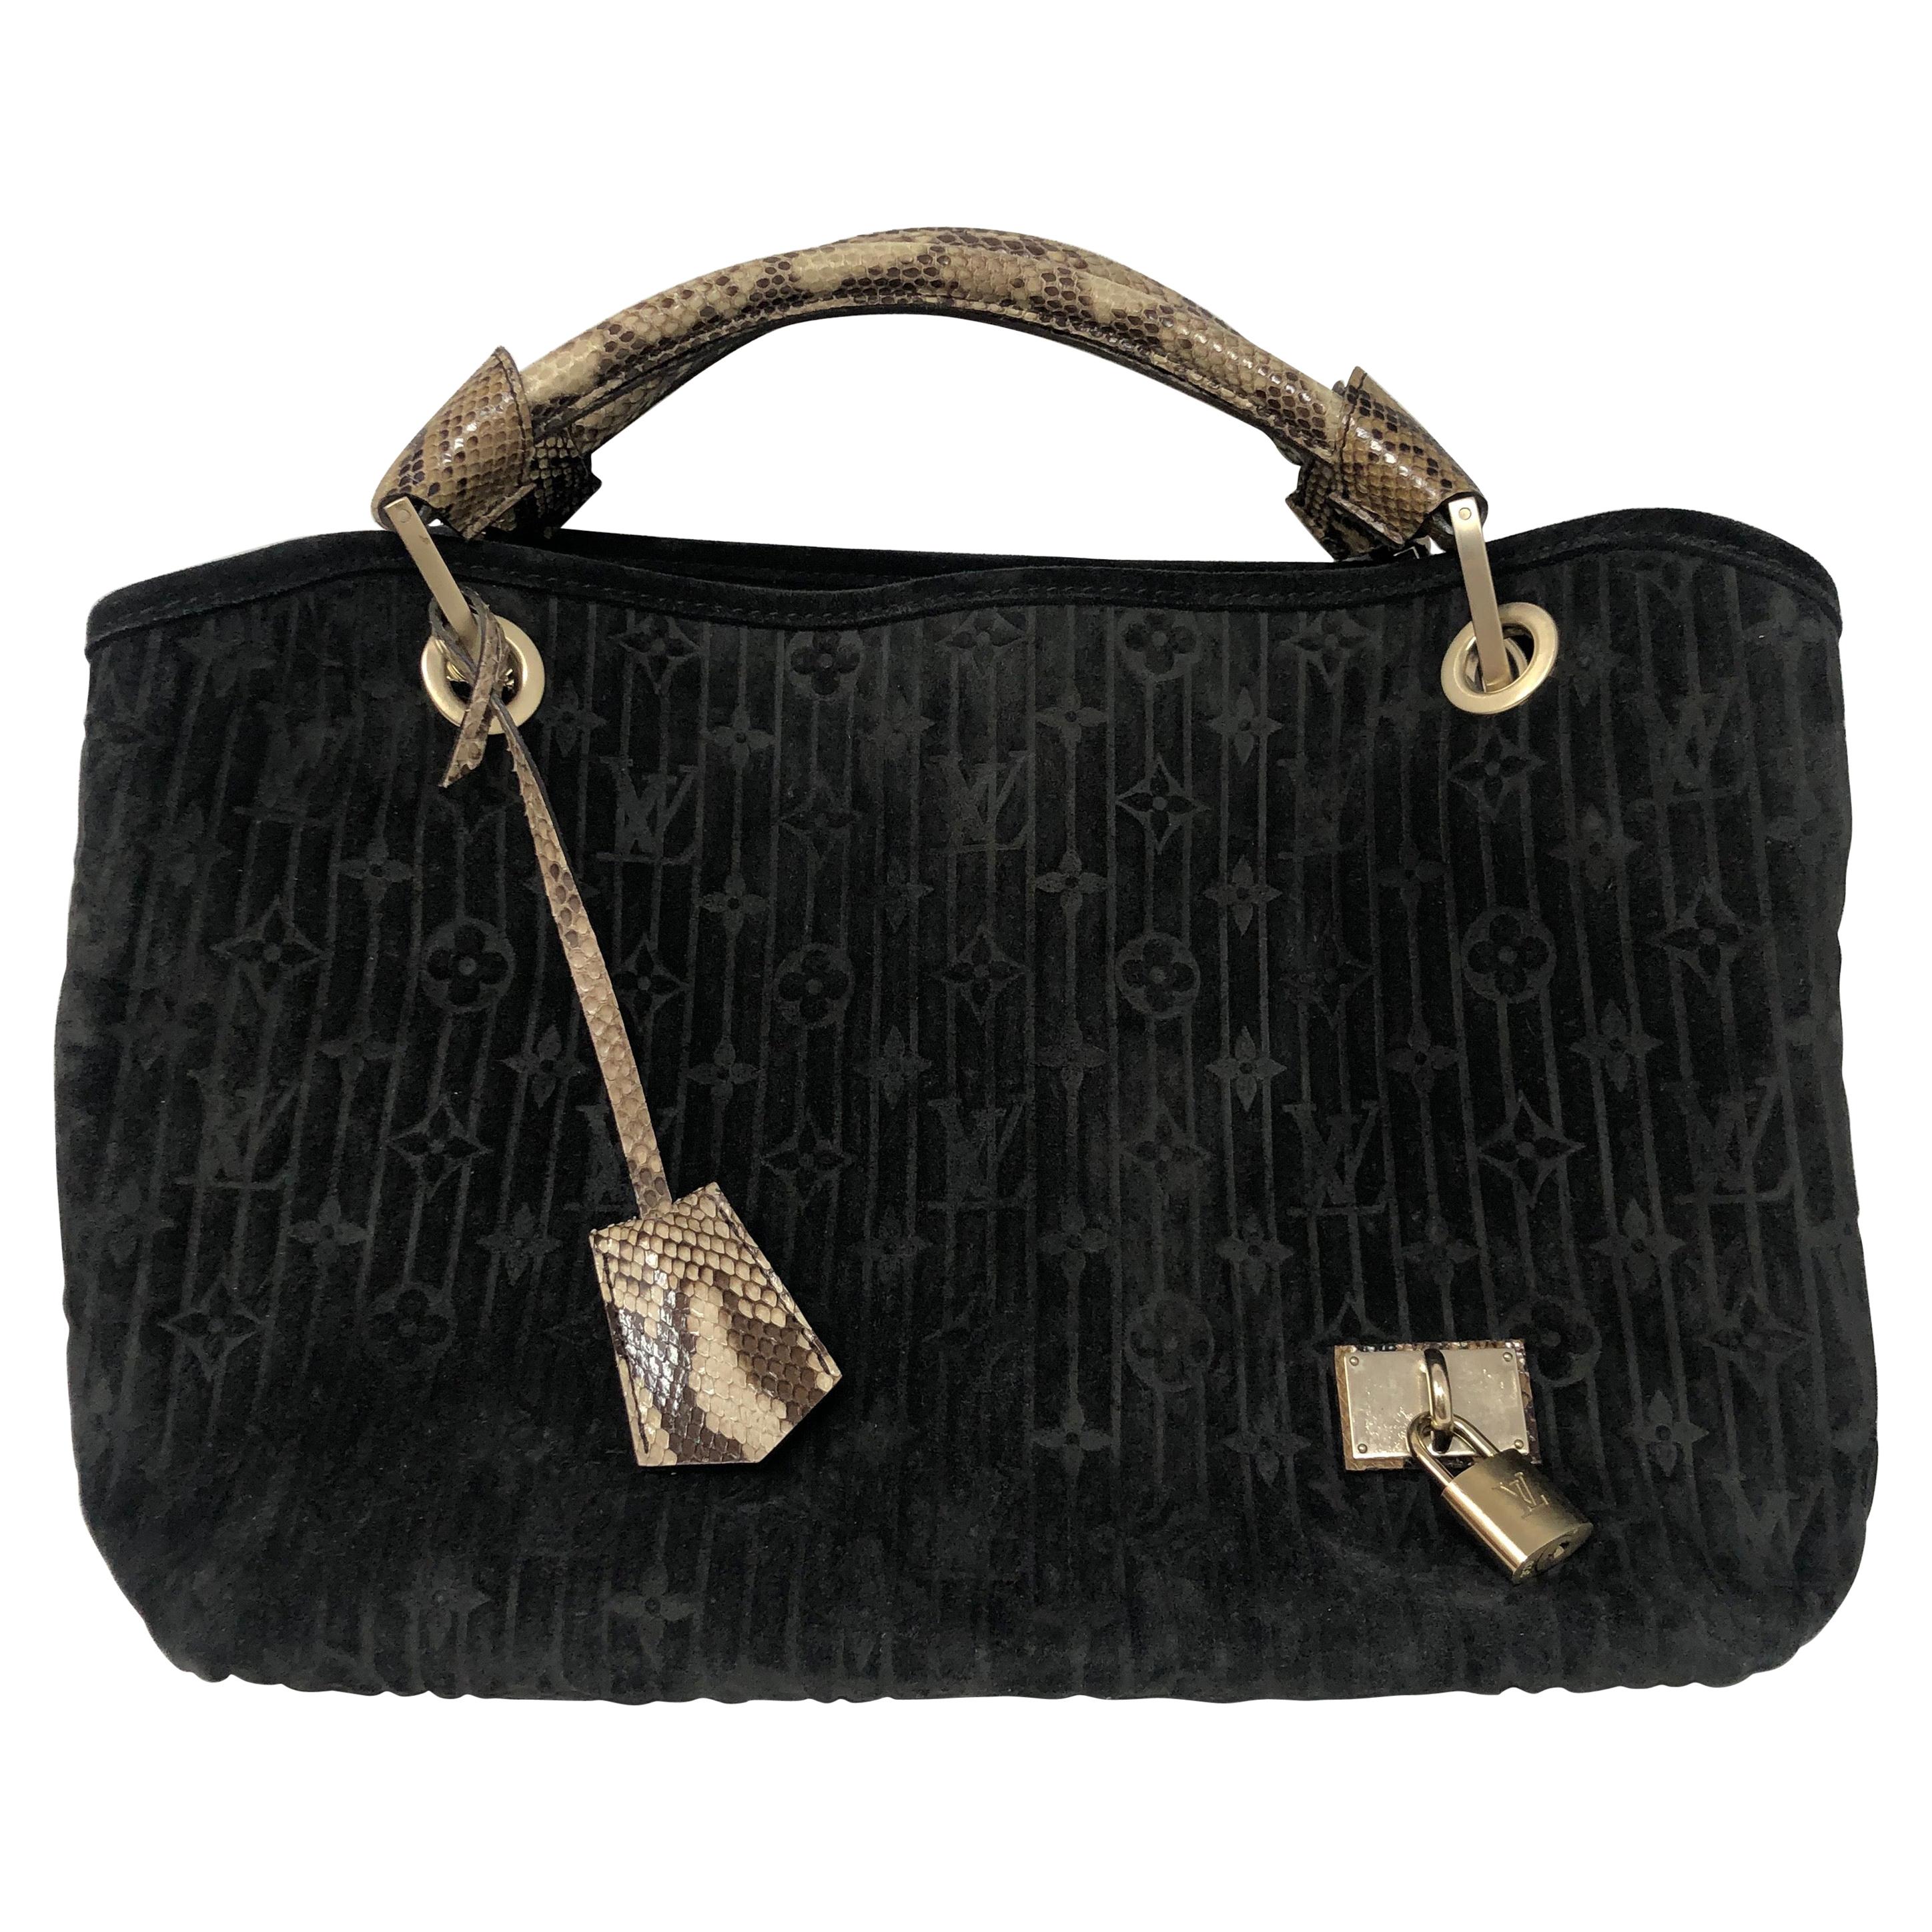 Louis Vuitton Black Suede Python Handles Bag 